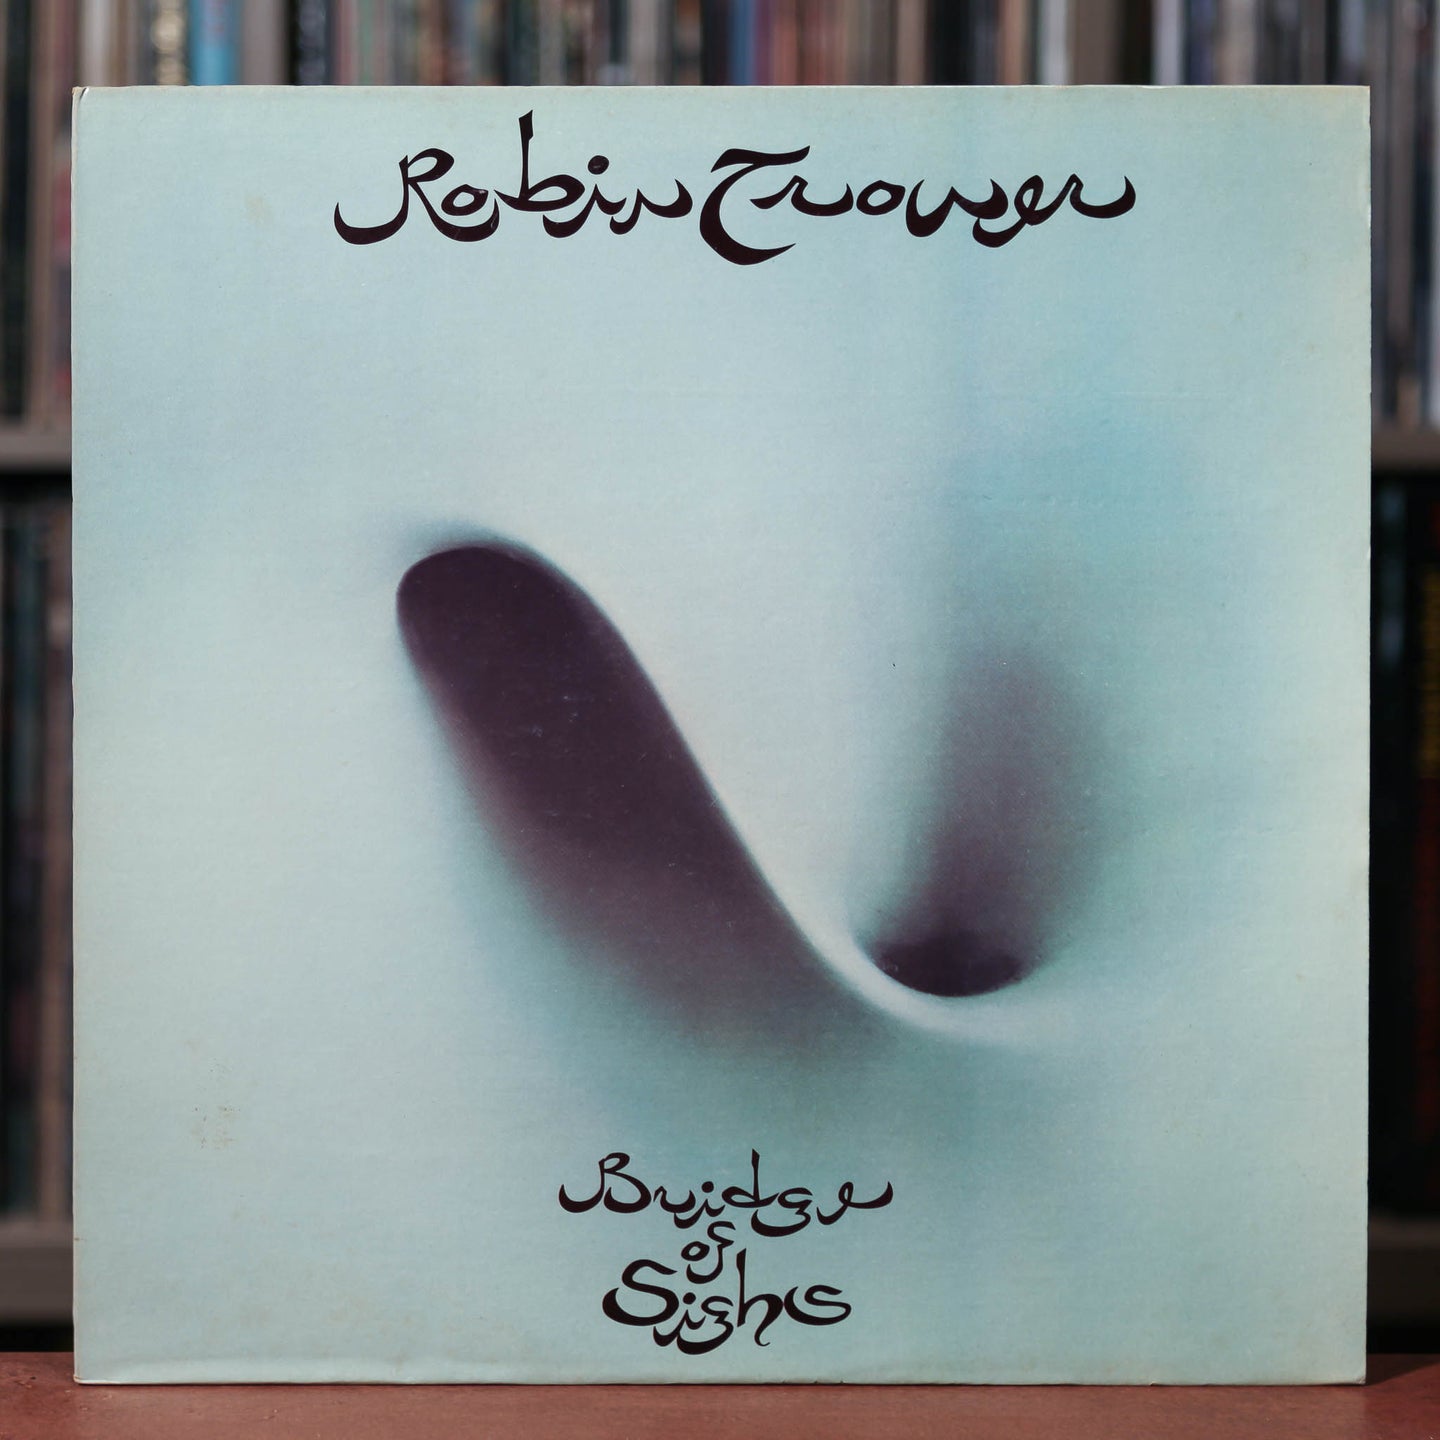 Robin Trower - Bridge Of Sighs - 1974 Chrysalis, EX/VG